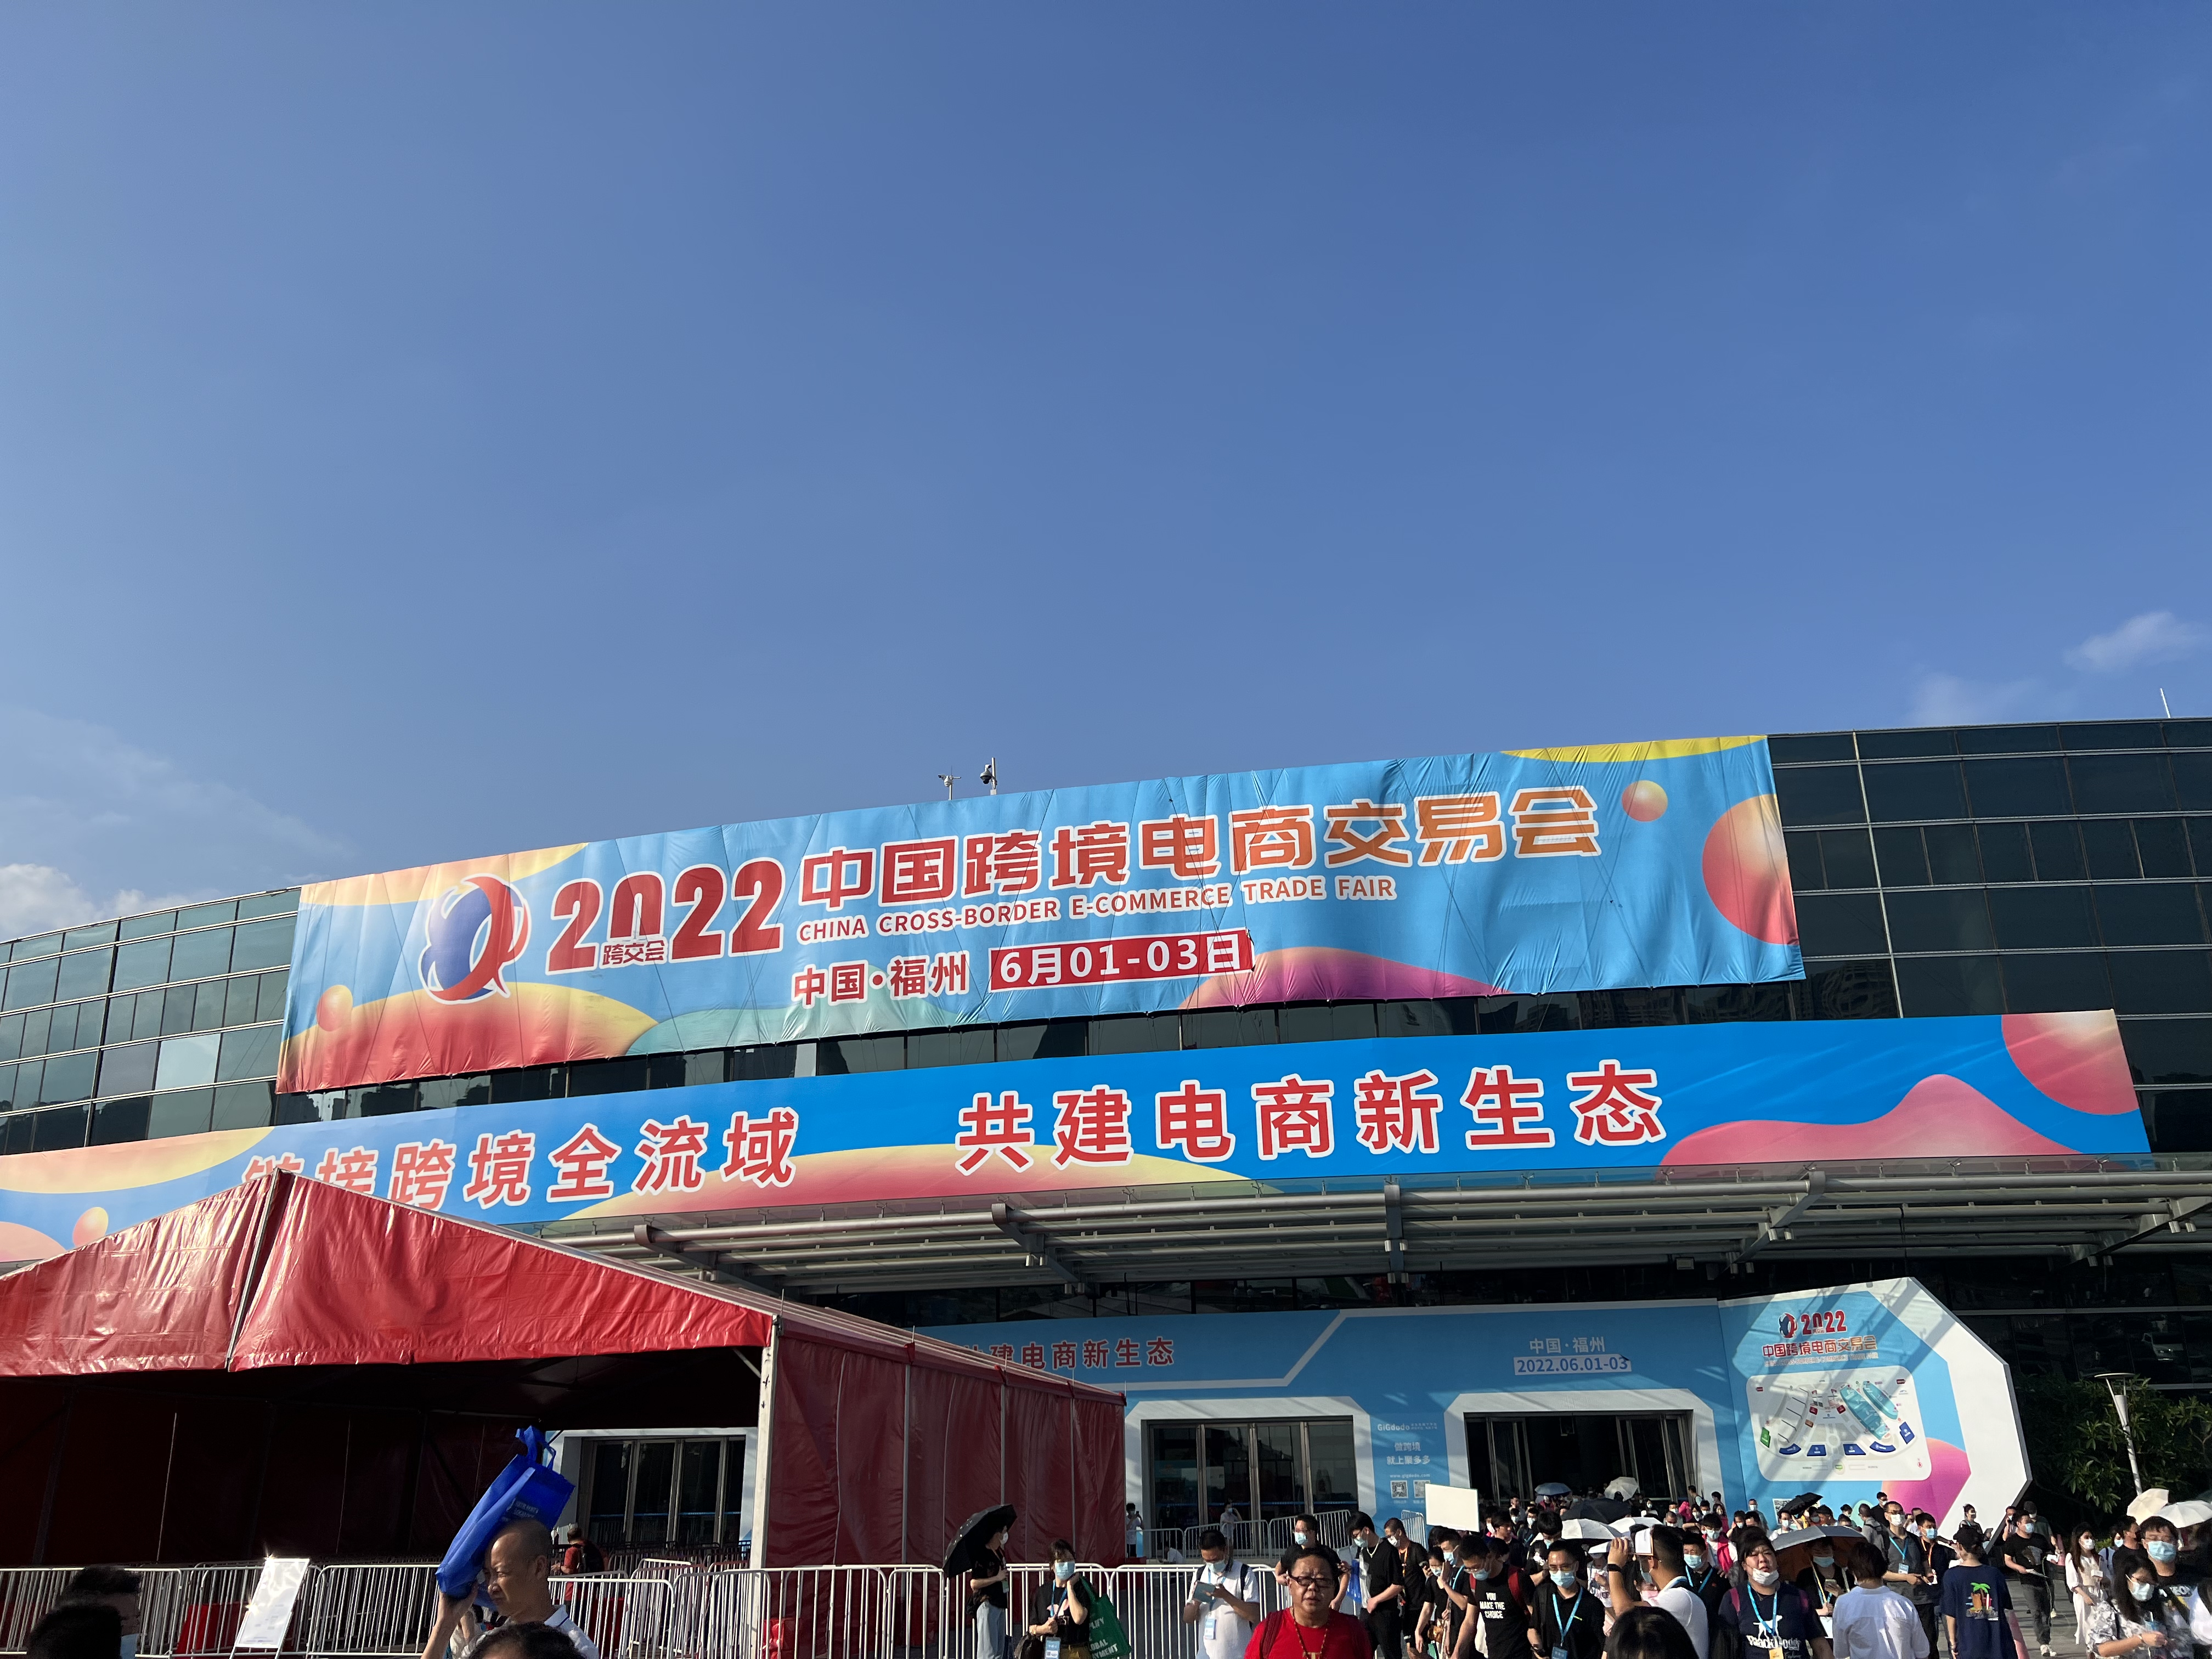 China Cross-border E-commerce Fair